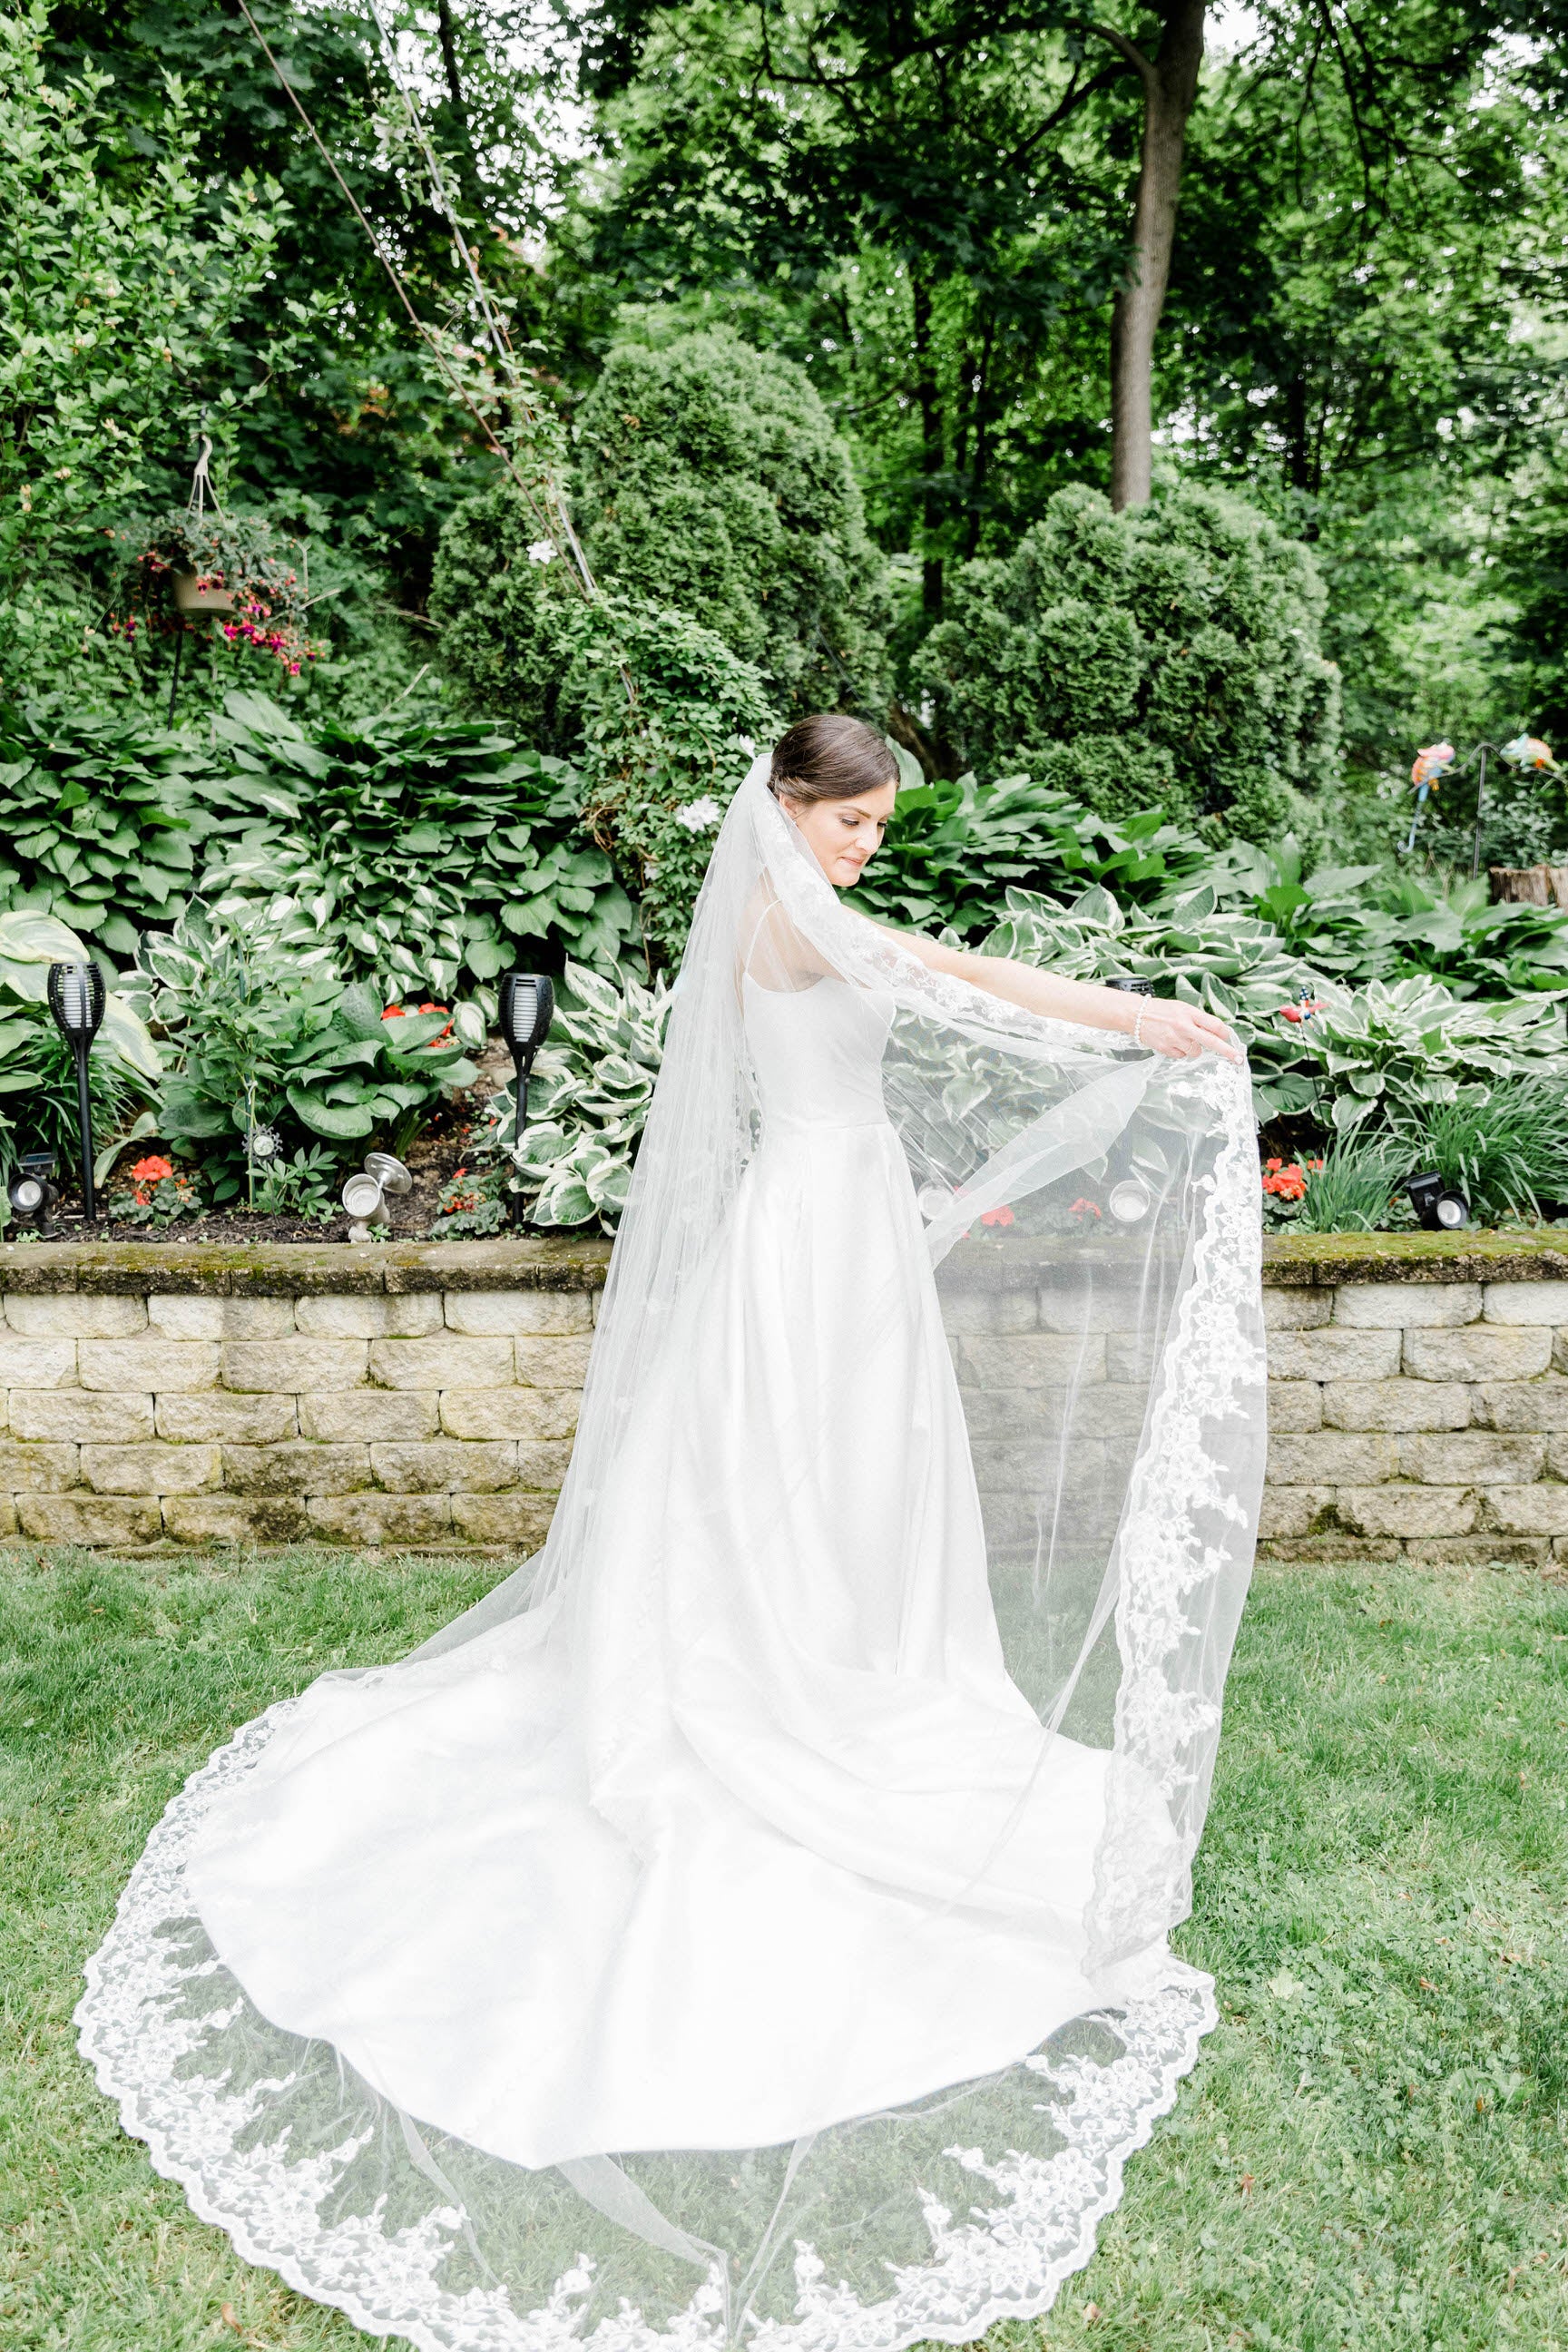 Elegant Chapel Veils Lace Appliques Long Wedding Veils